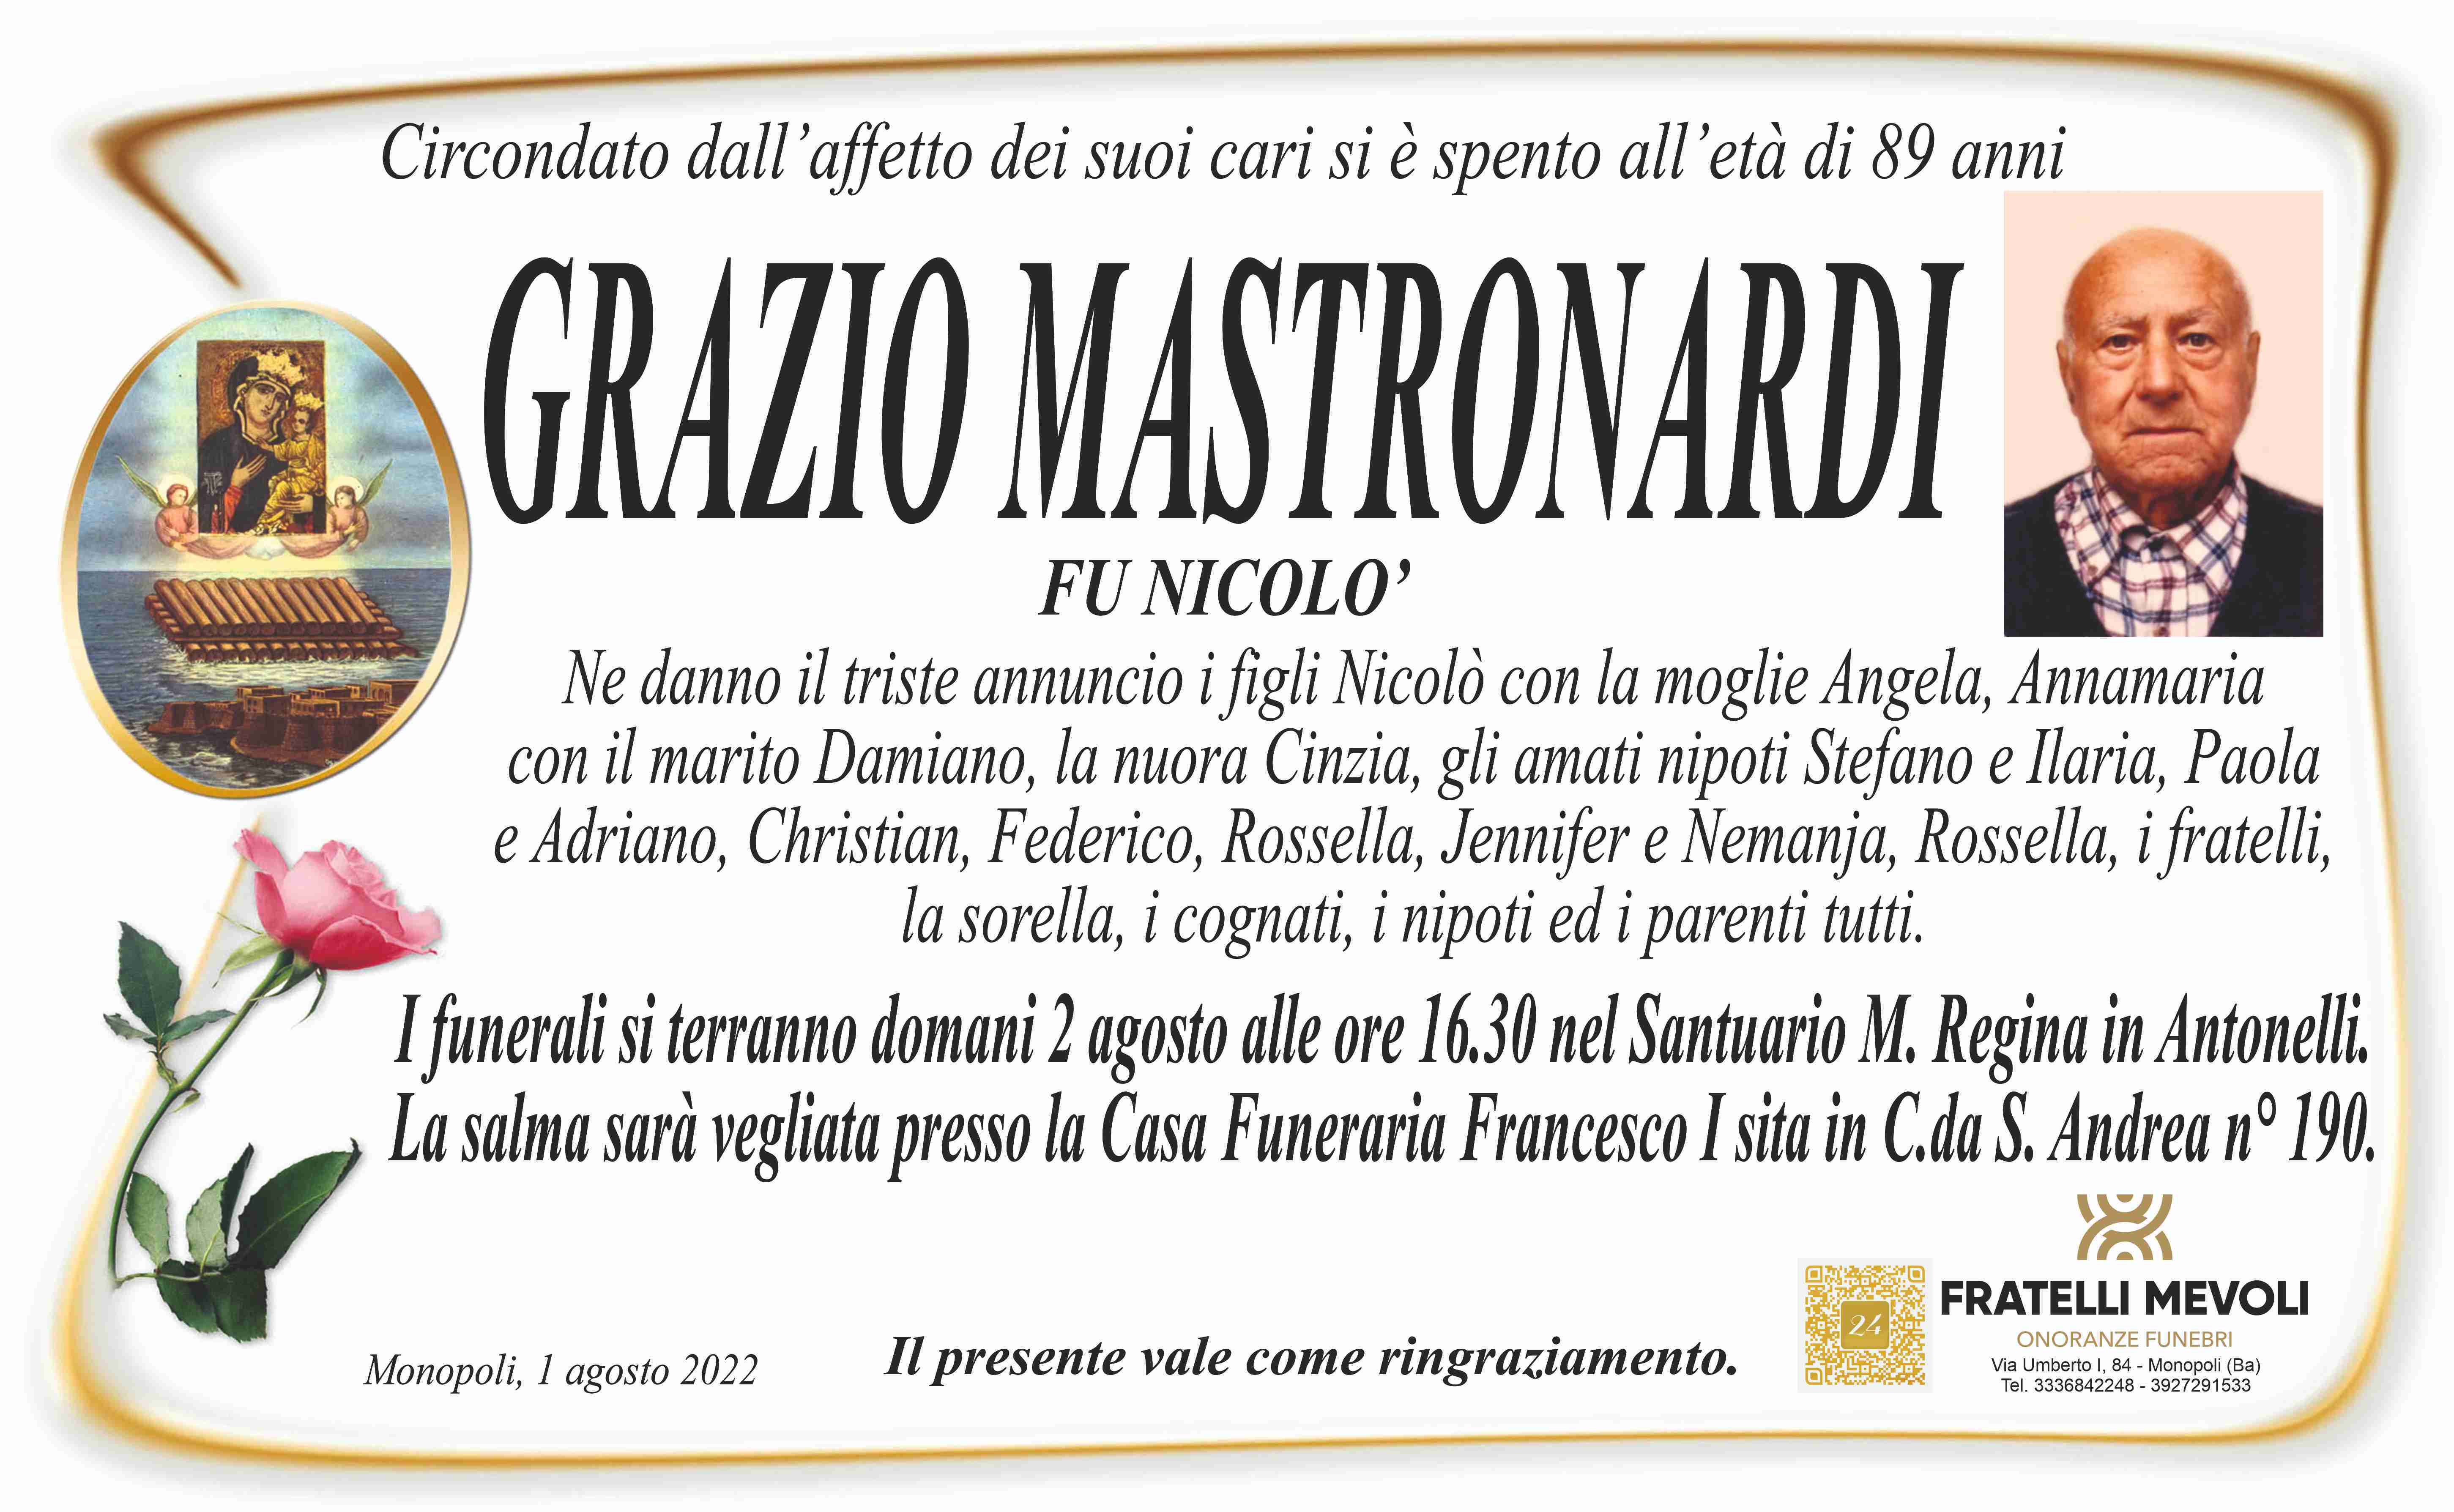 Grazio Mastronardi